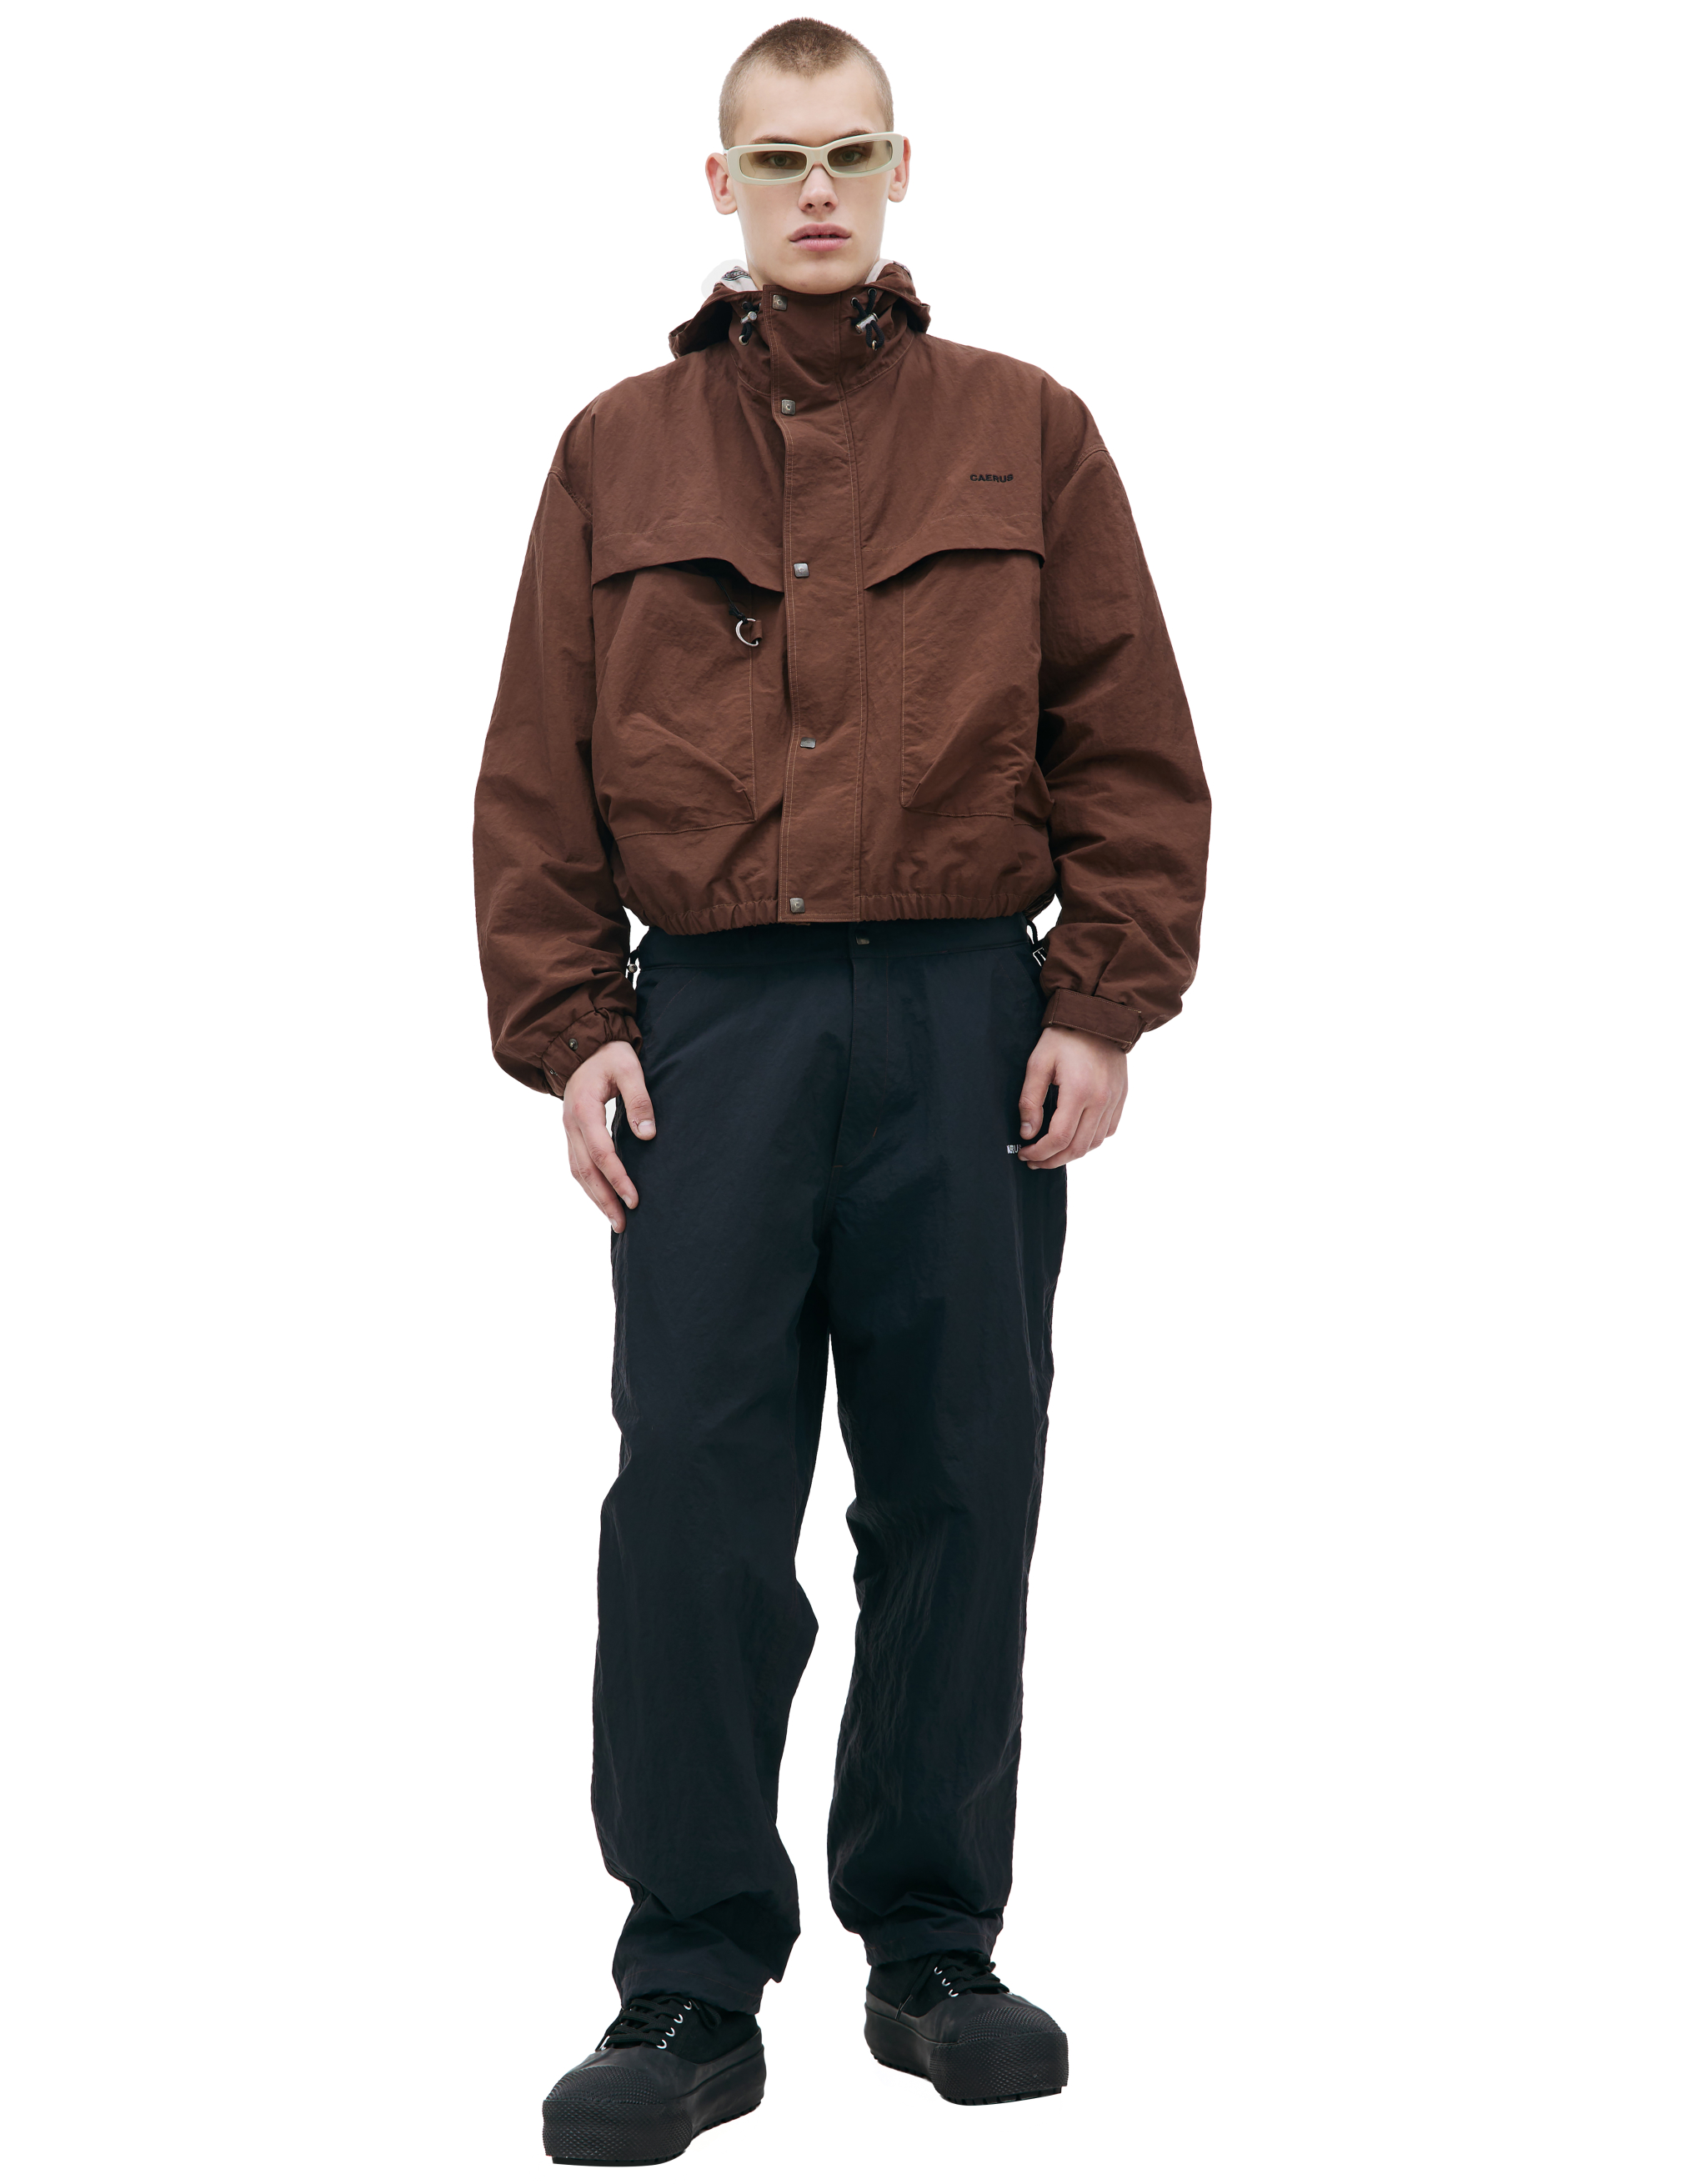 Укороченная куртка с вышивкой CAERUS JK-002/BROWN, размер 3